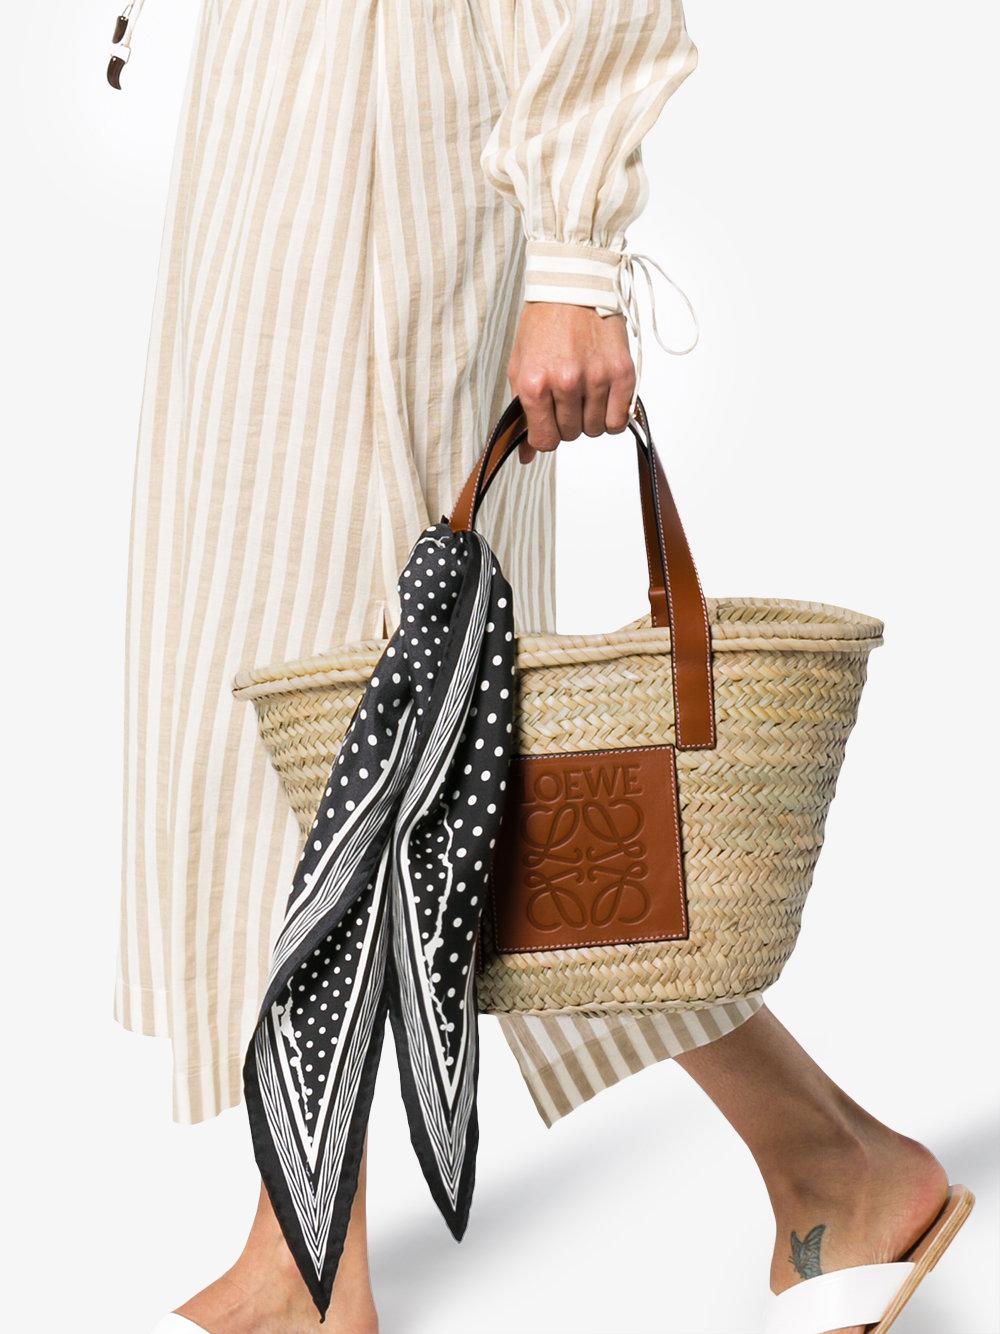 LOEWE - Basket woven raffia bag